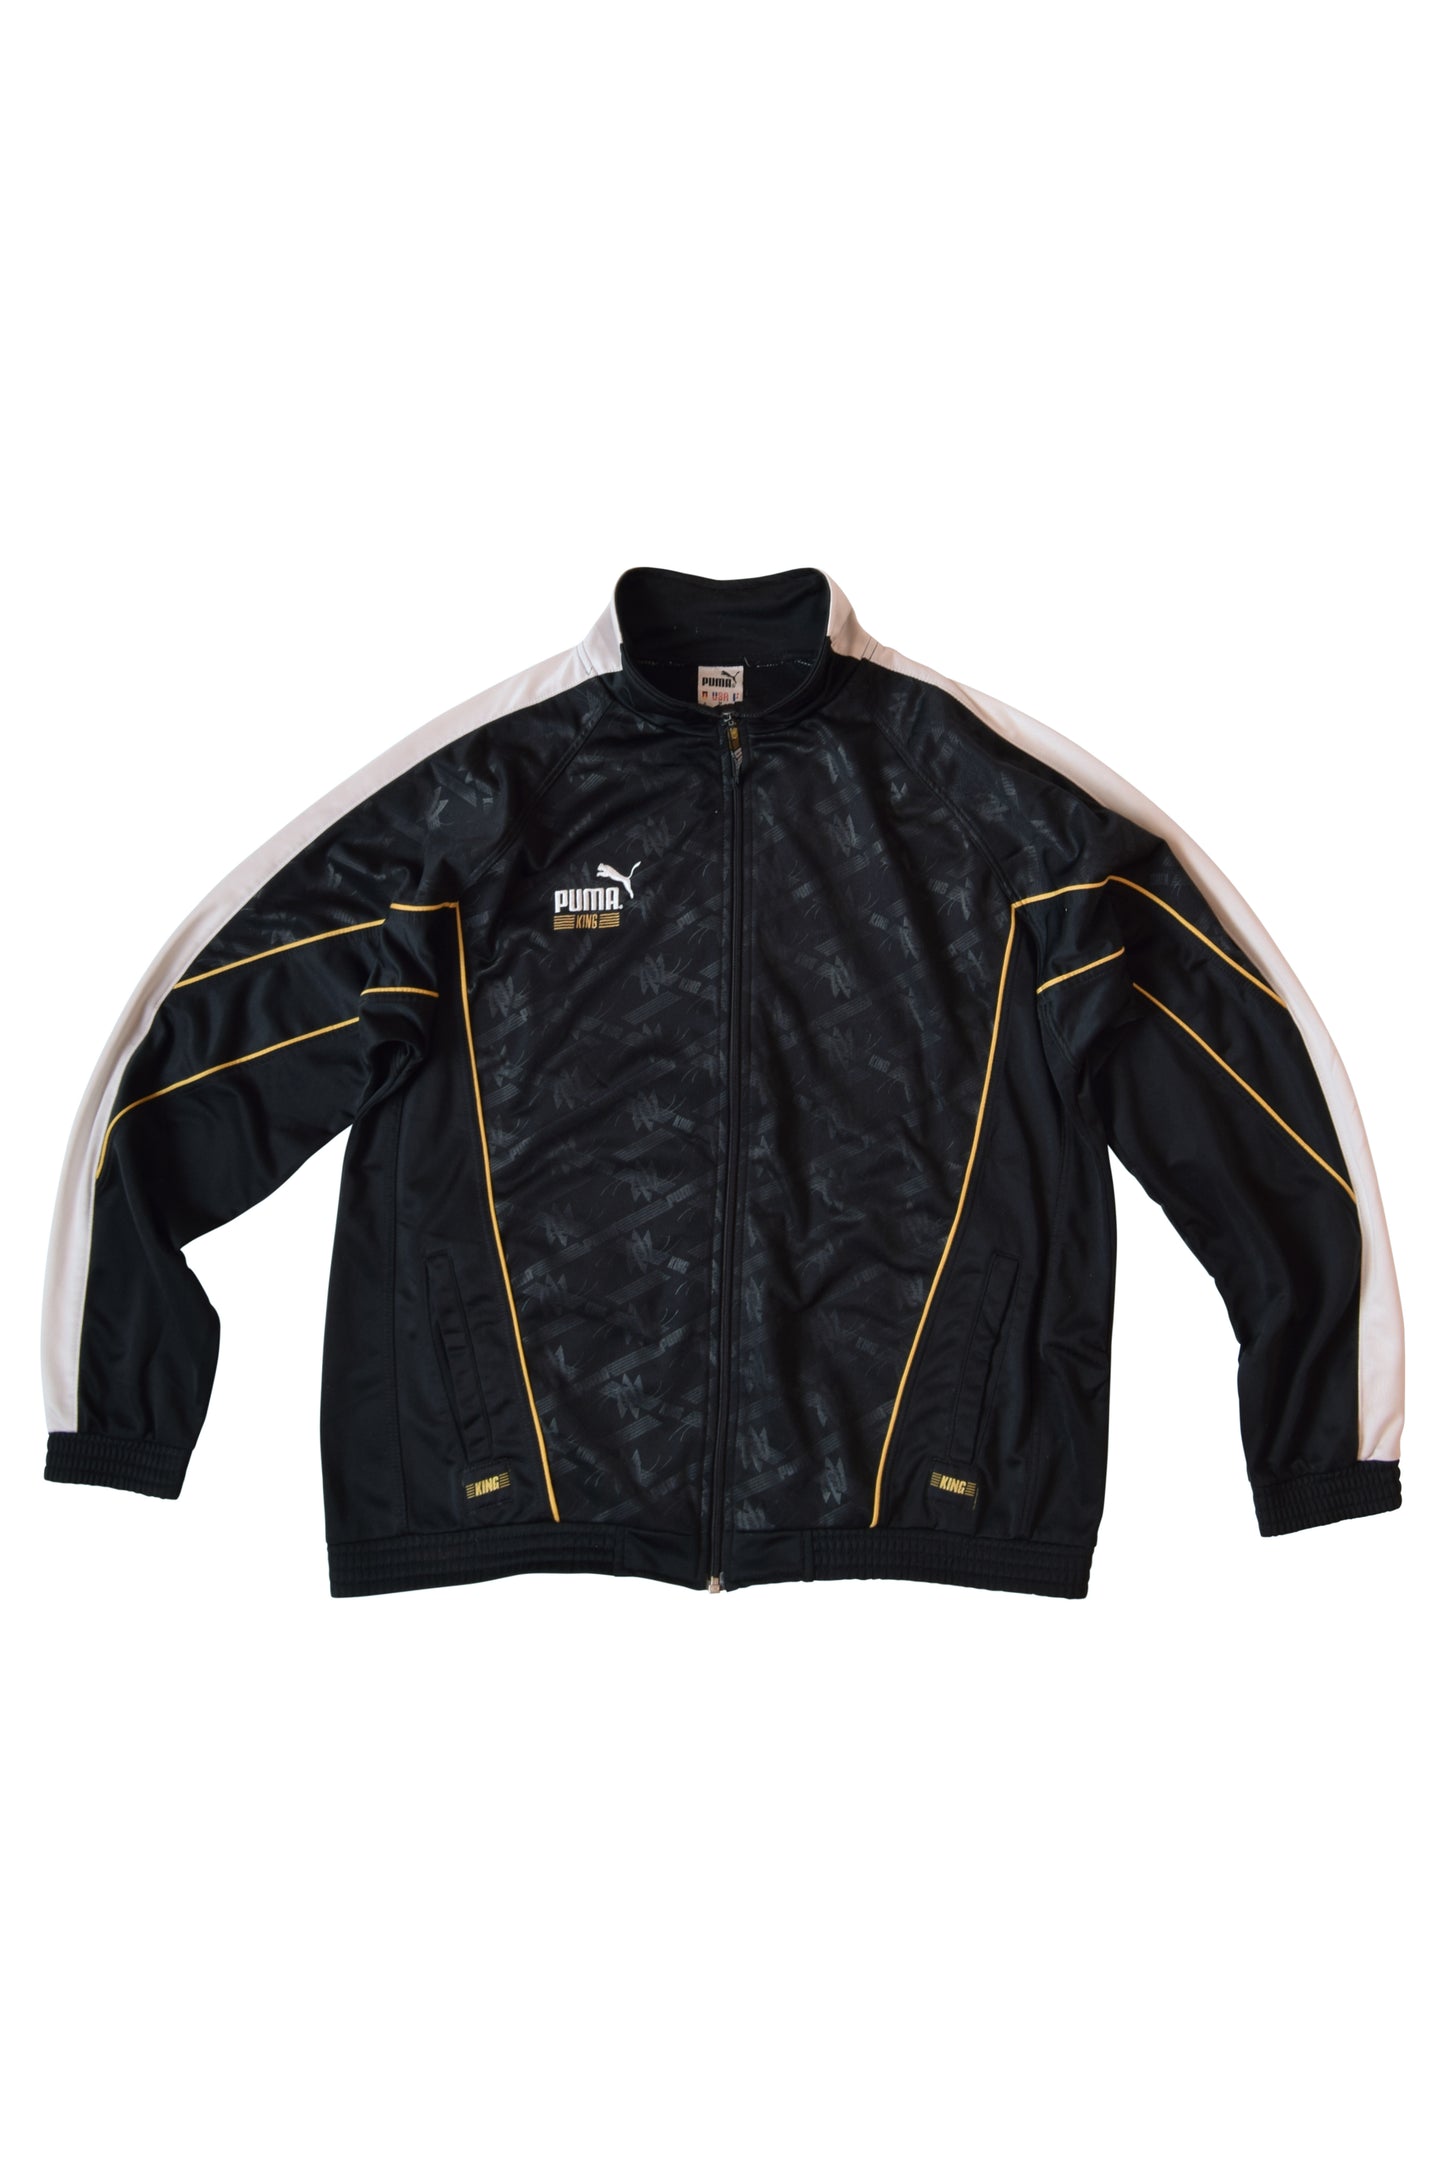 Vintage Puma King Jacket / Track Top 90's Size M